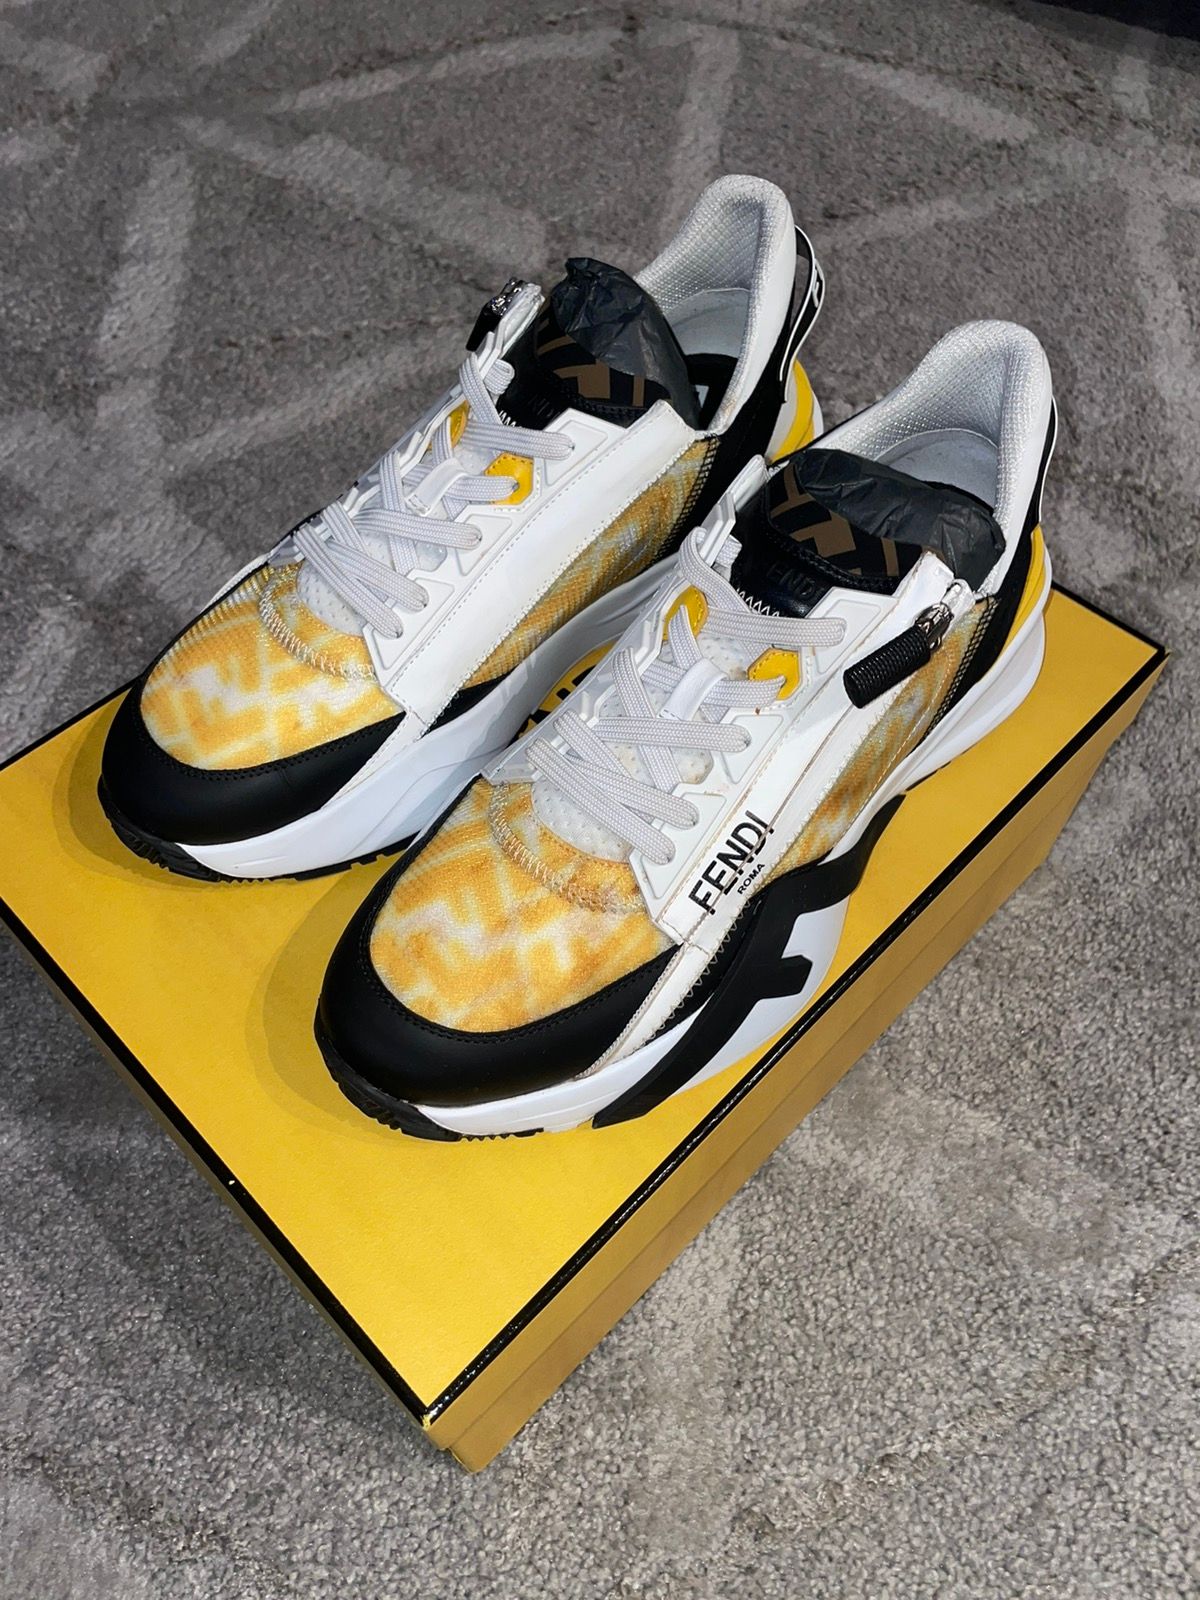 New Fendi 2019 Black Knit Neon Yellow Air Sole Low Runner Sneaker 7e1234 EU44